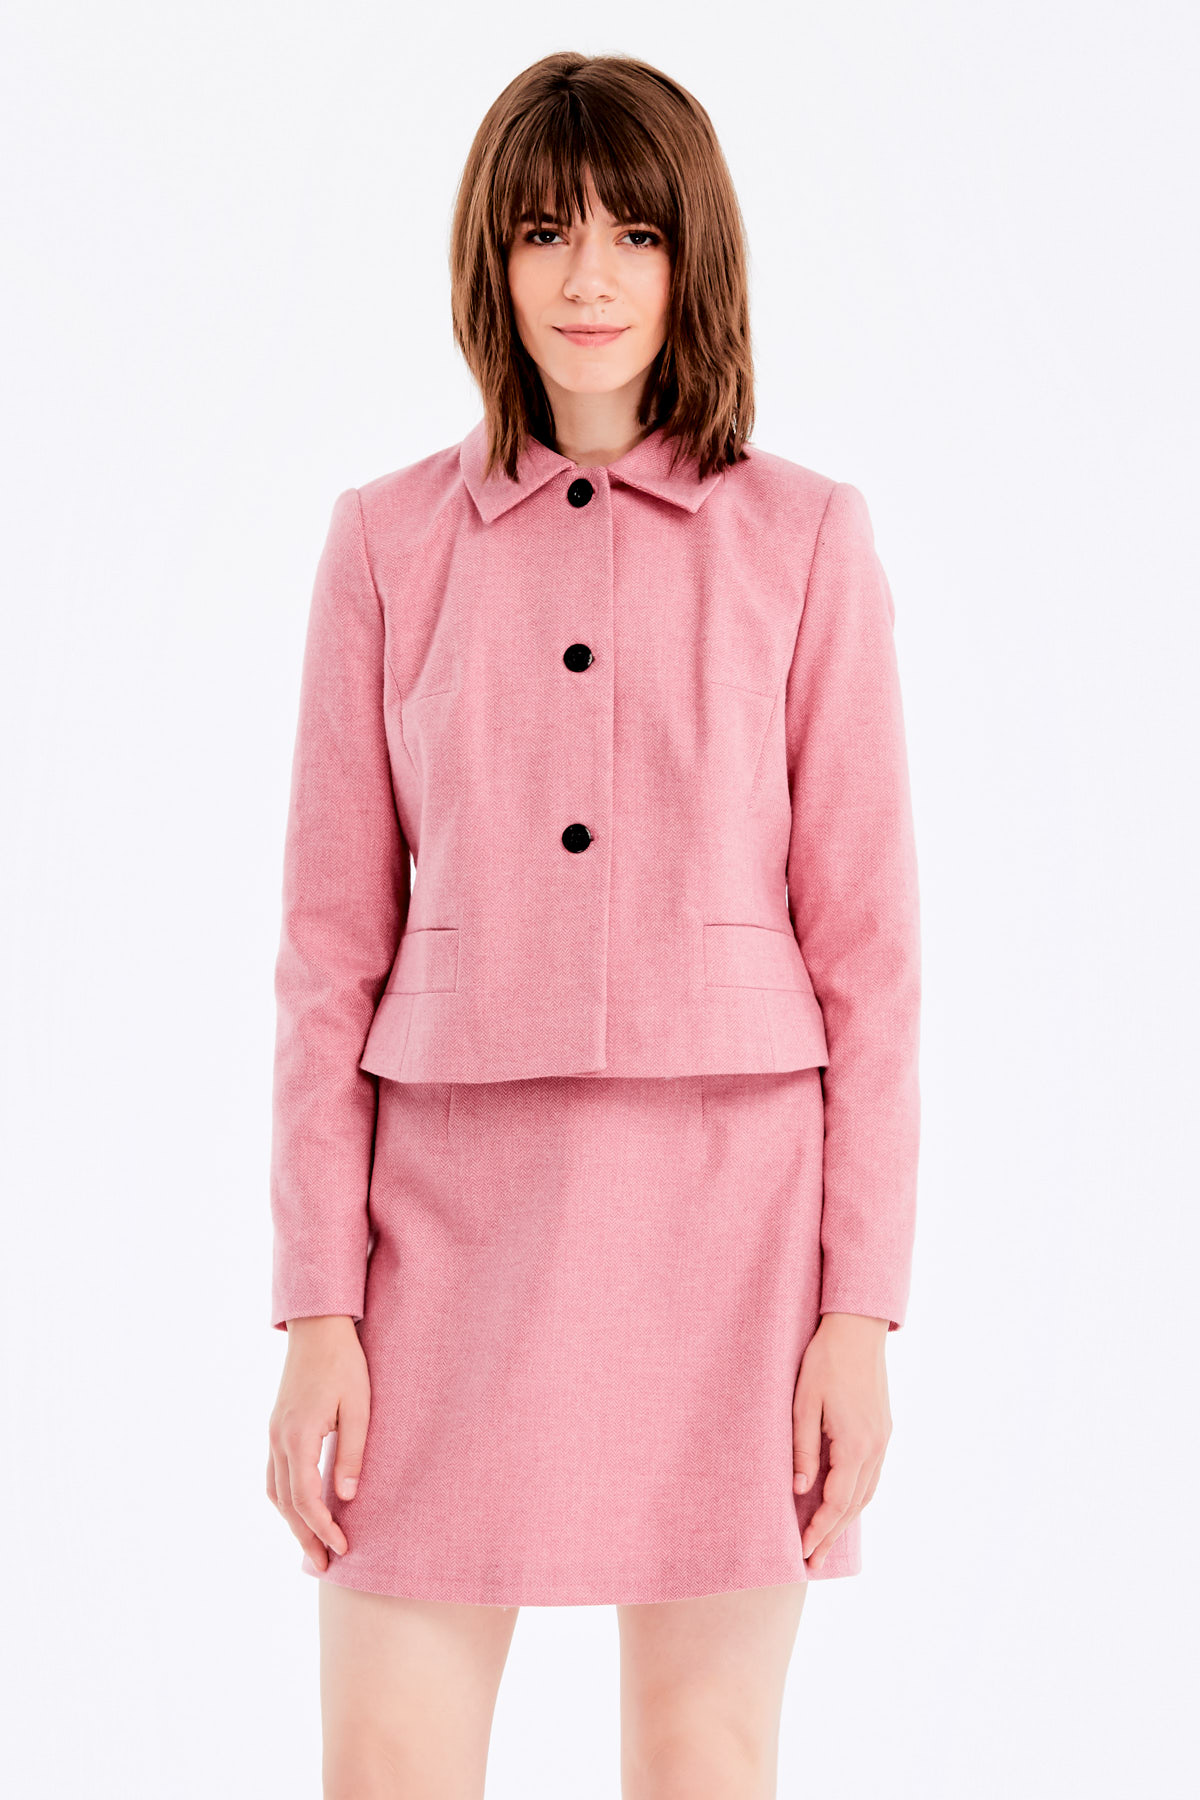 Short jacket with pink herringbone print, photo 2